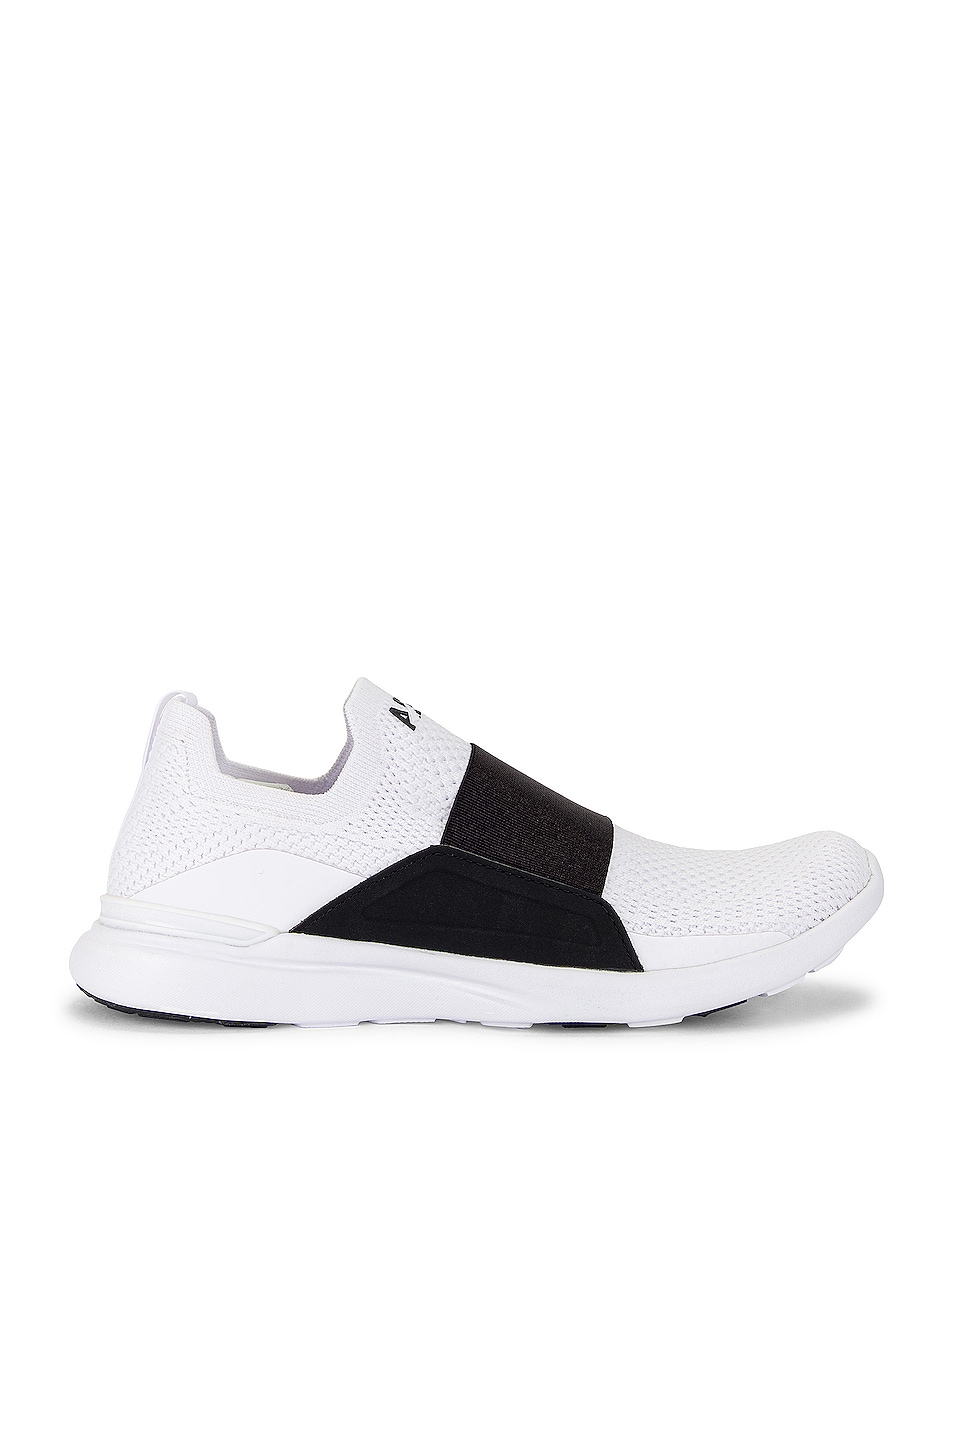 Image 1 of APL: Athletic Propulsion Labs TechLoom Bliss Sneaker in White & Black Strap